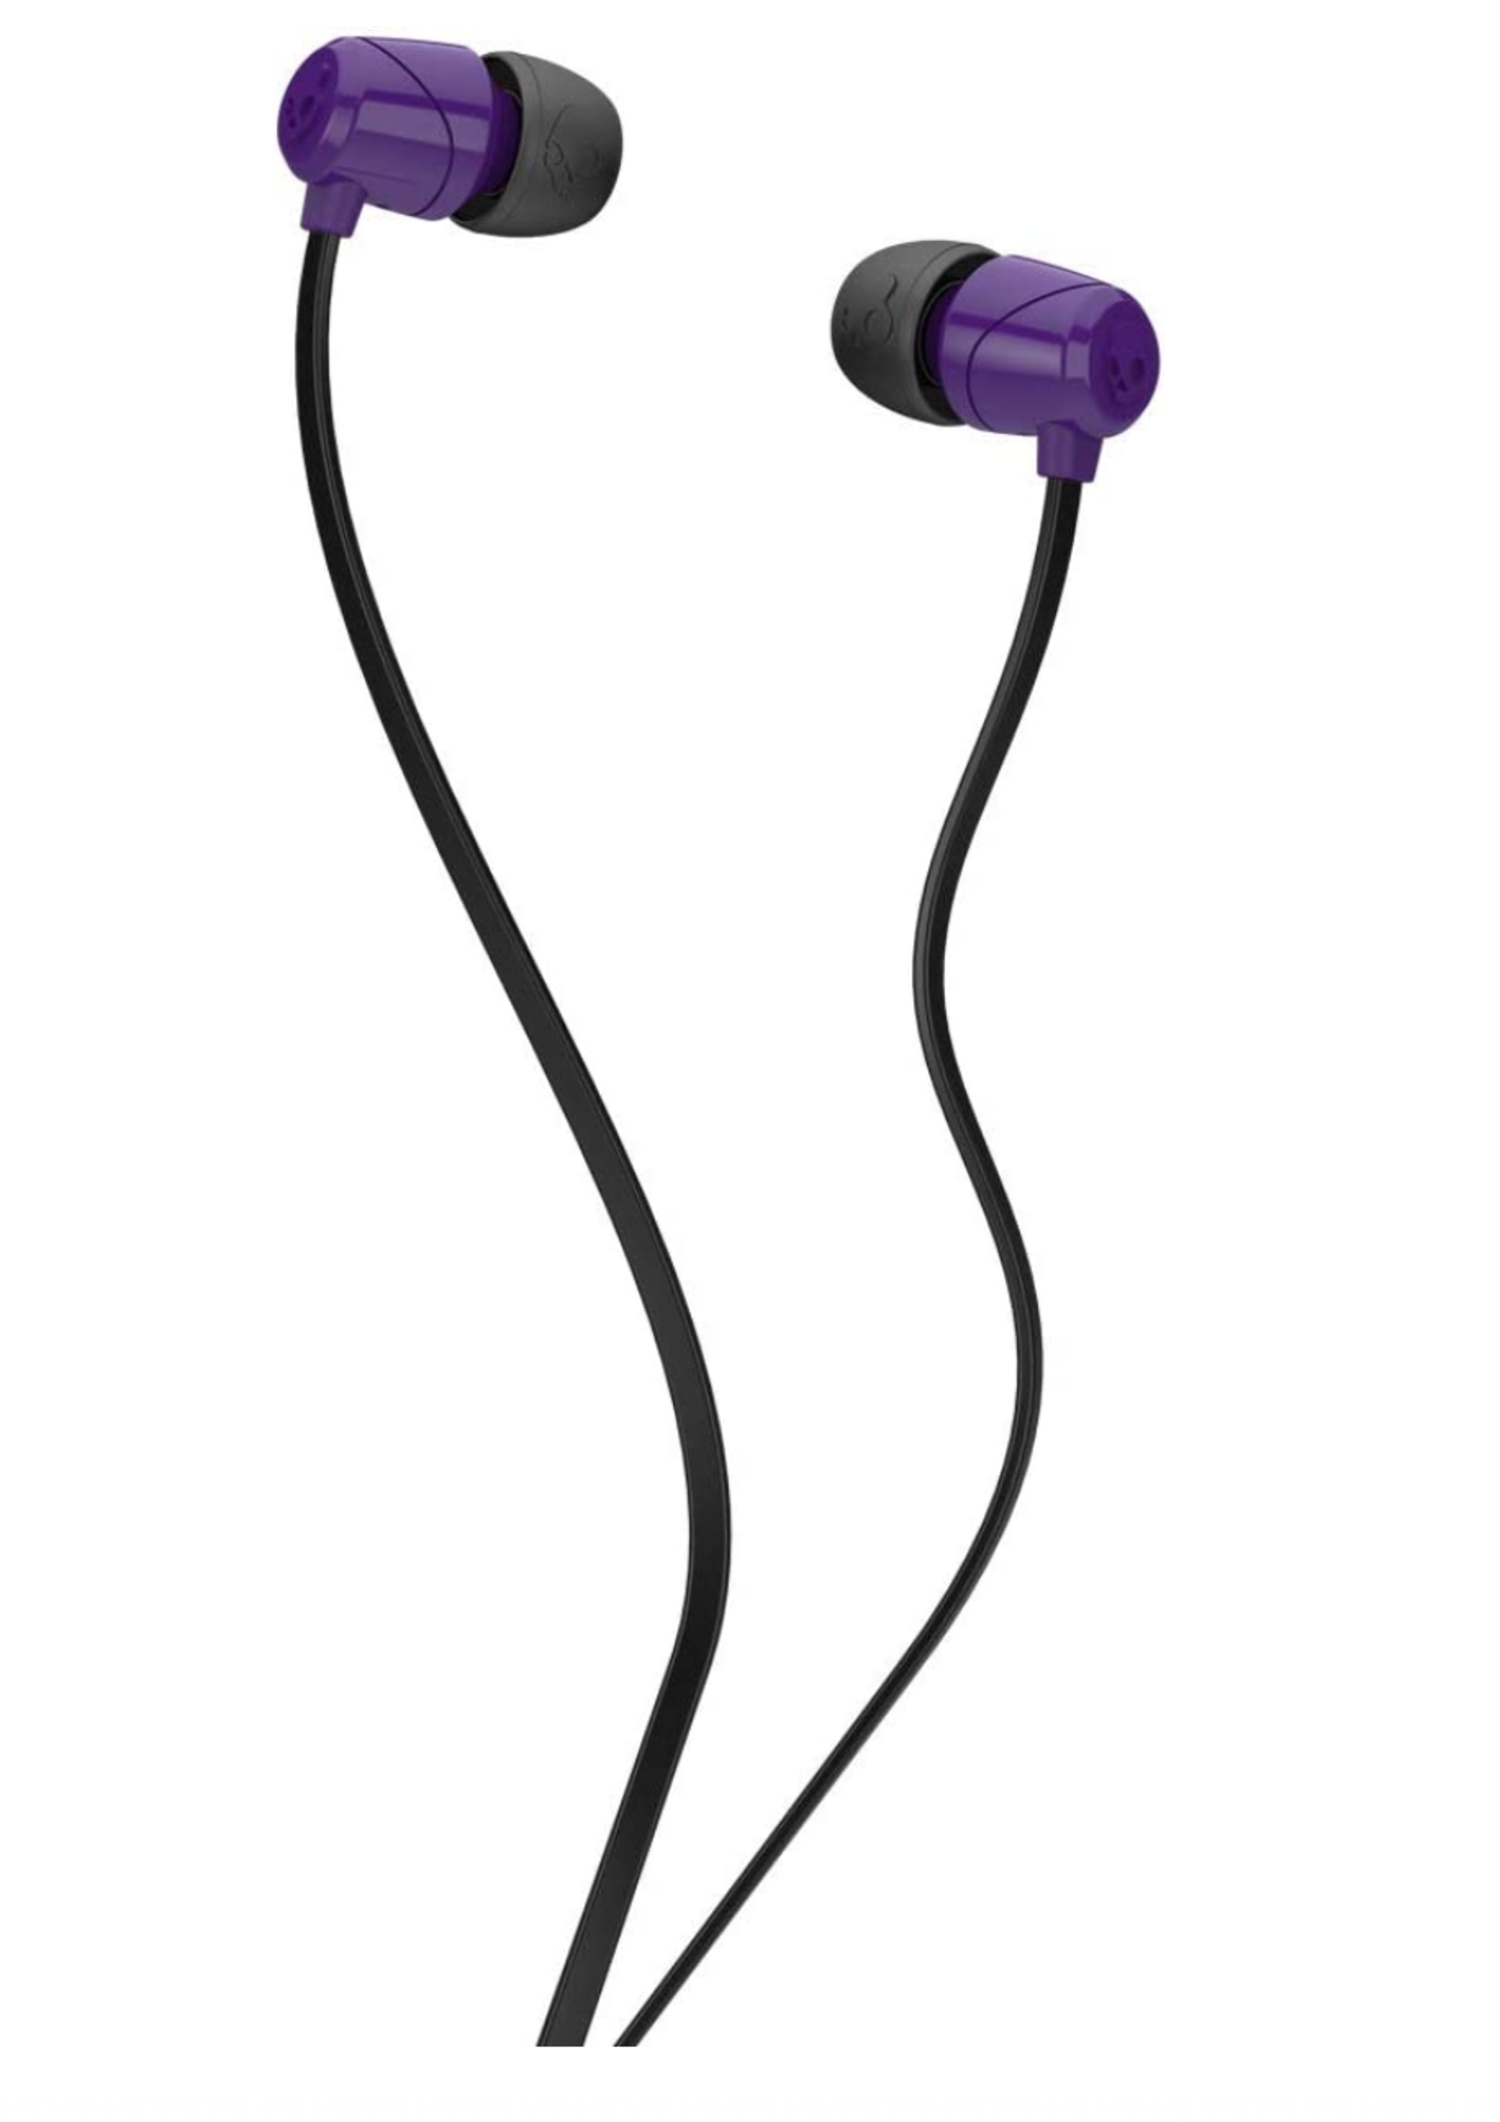 EarPods with 3.5mm Headphone Plug - kite+key, Rutgers Tech Store